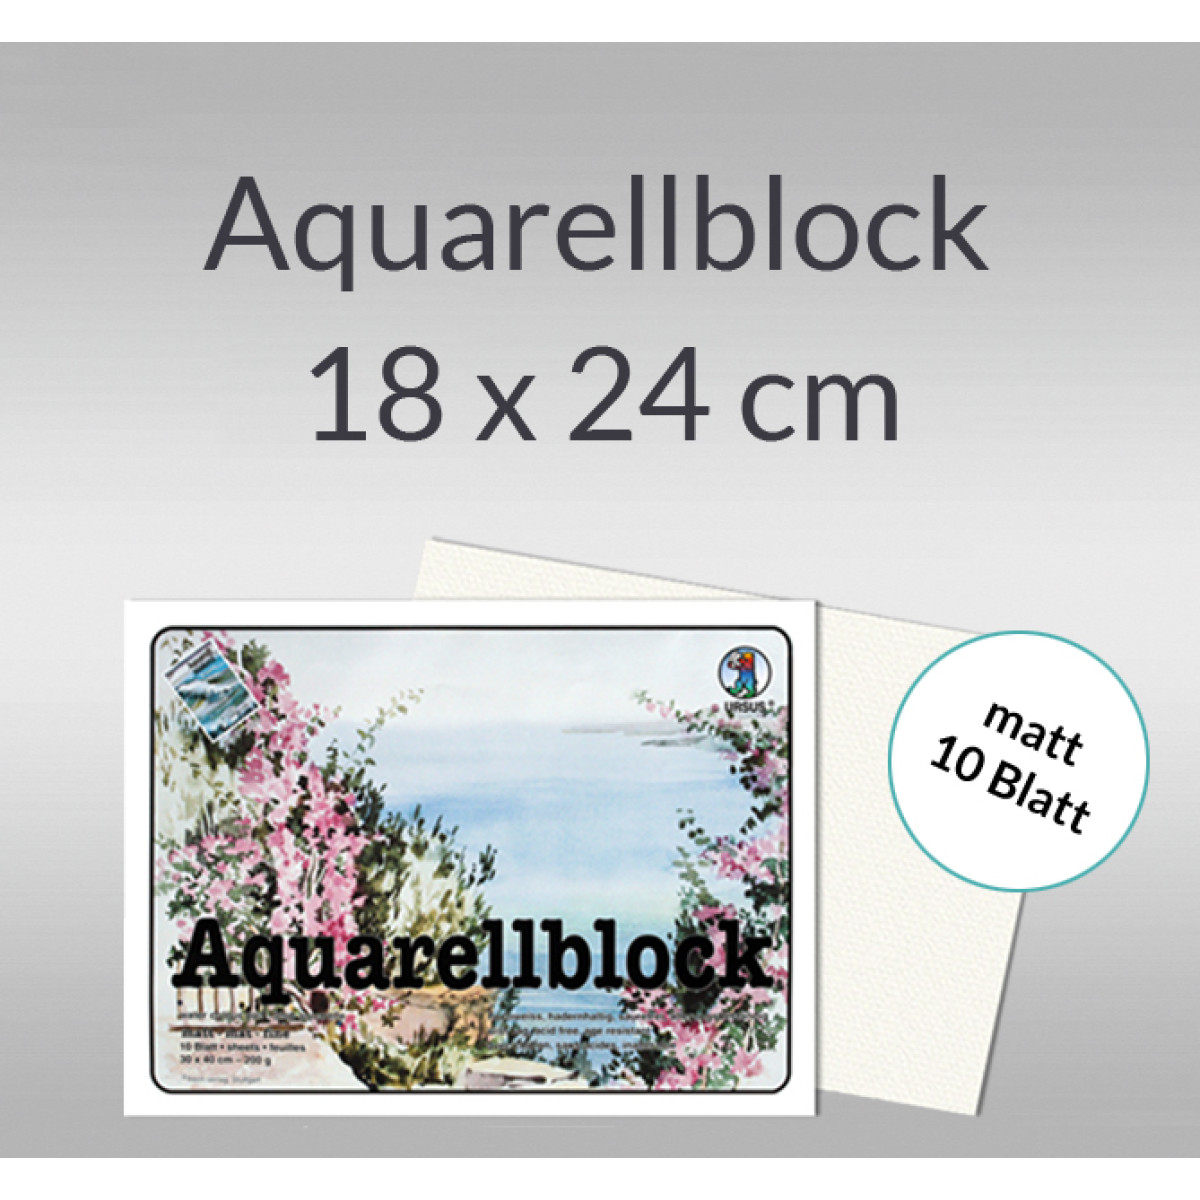 Aquarellblock matt 200 g/qm 18 x 24 cm